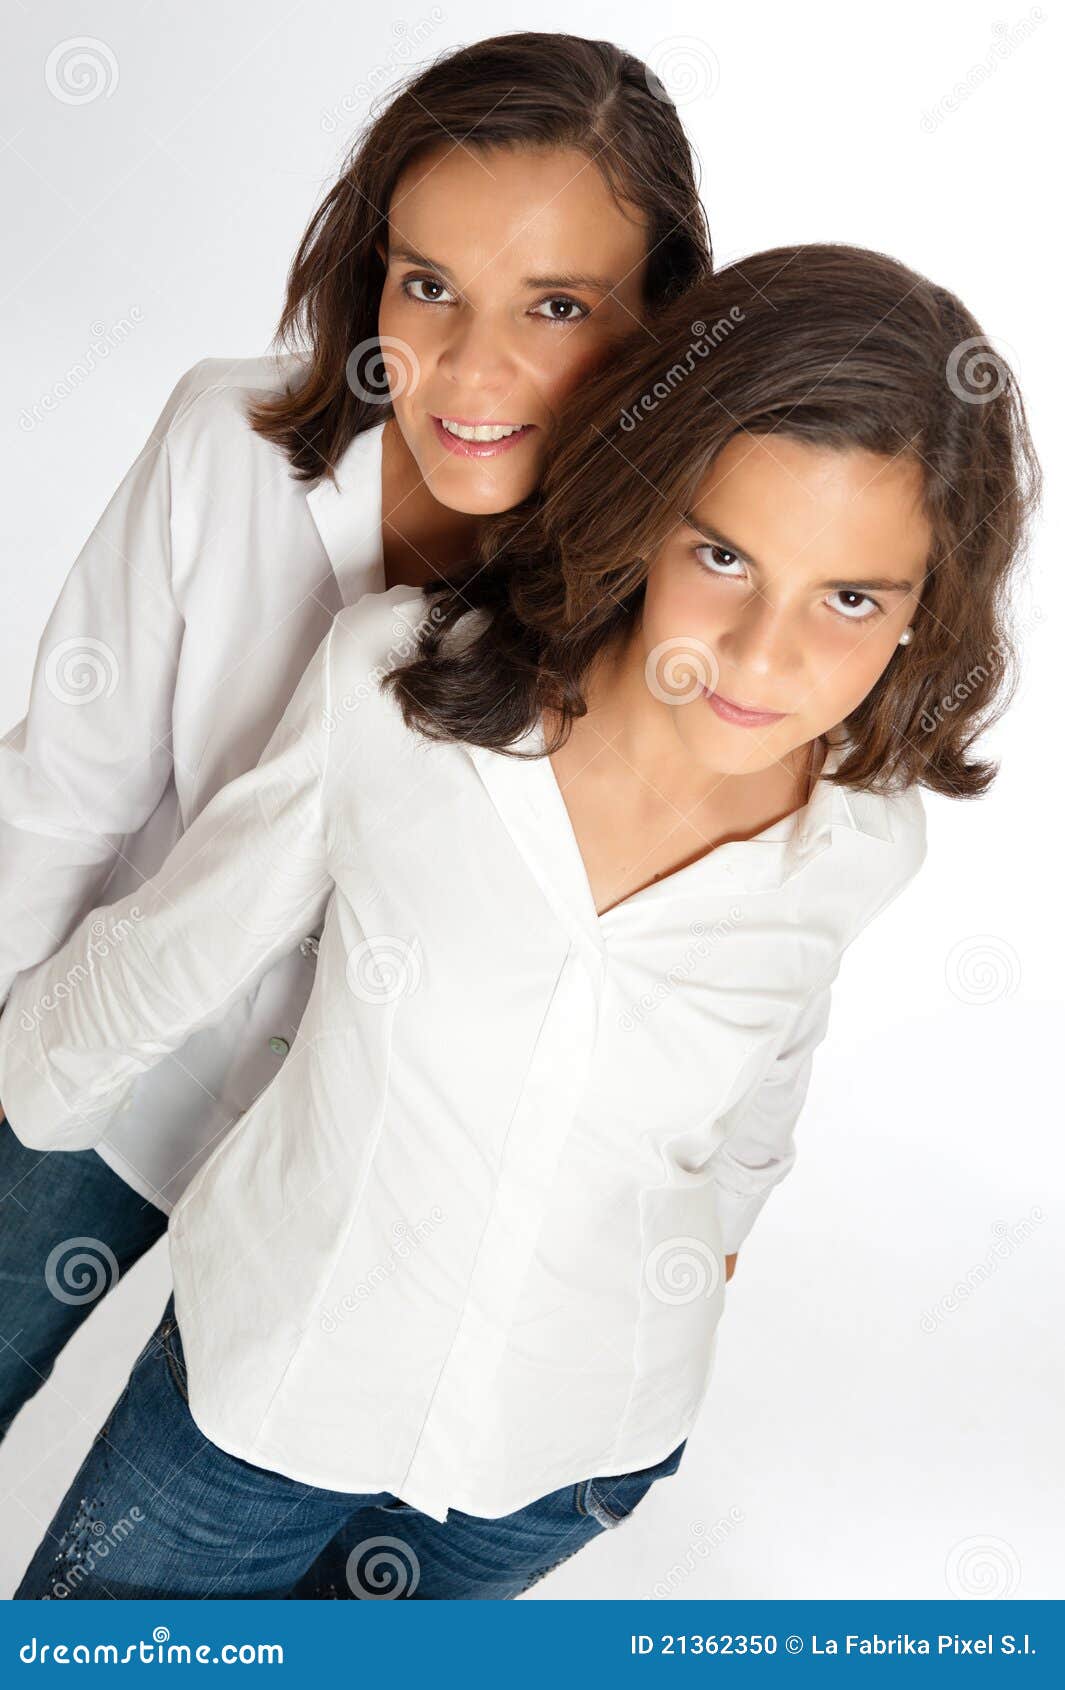 Bonding Mom And Daughter Stock Photo - Image: 21362350